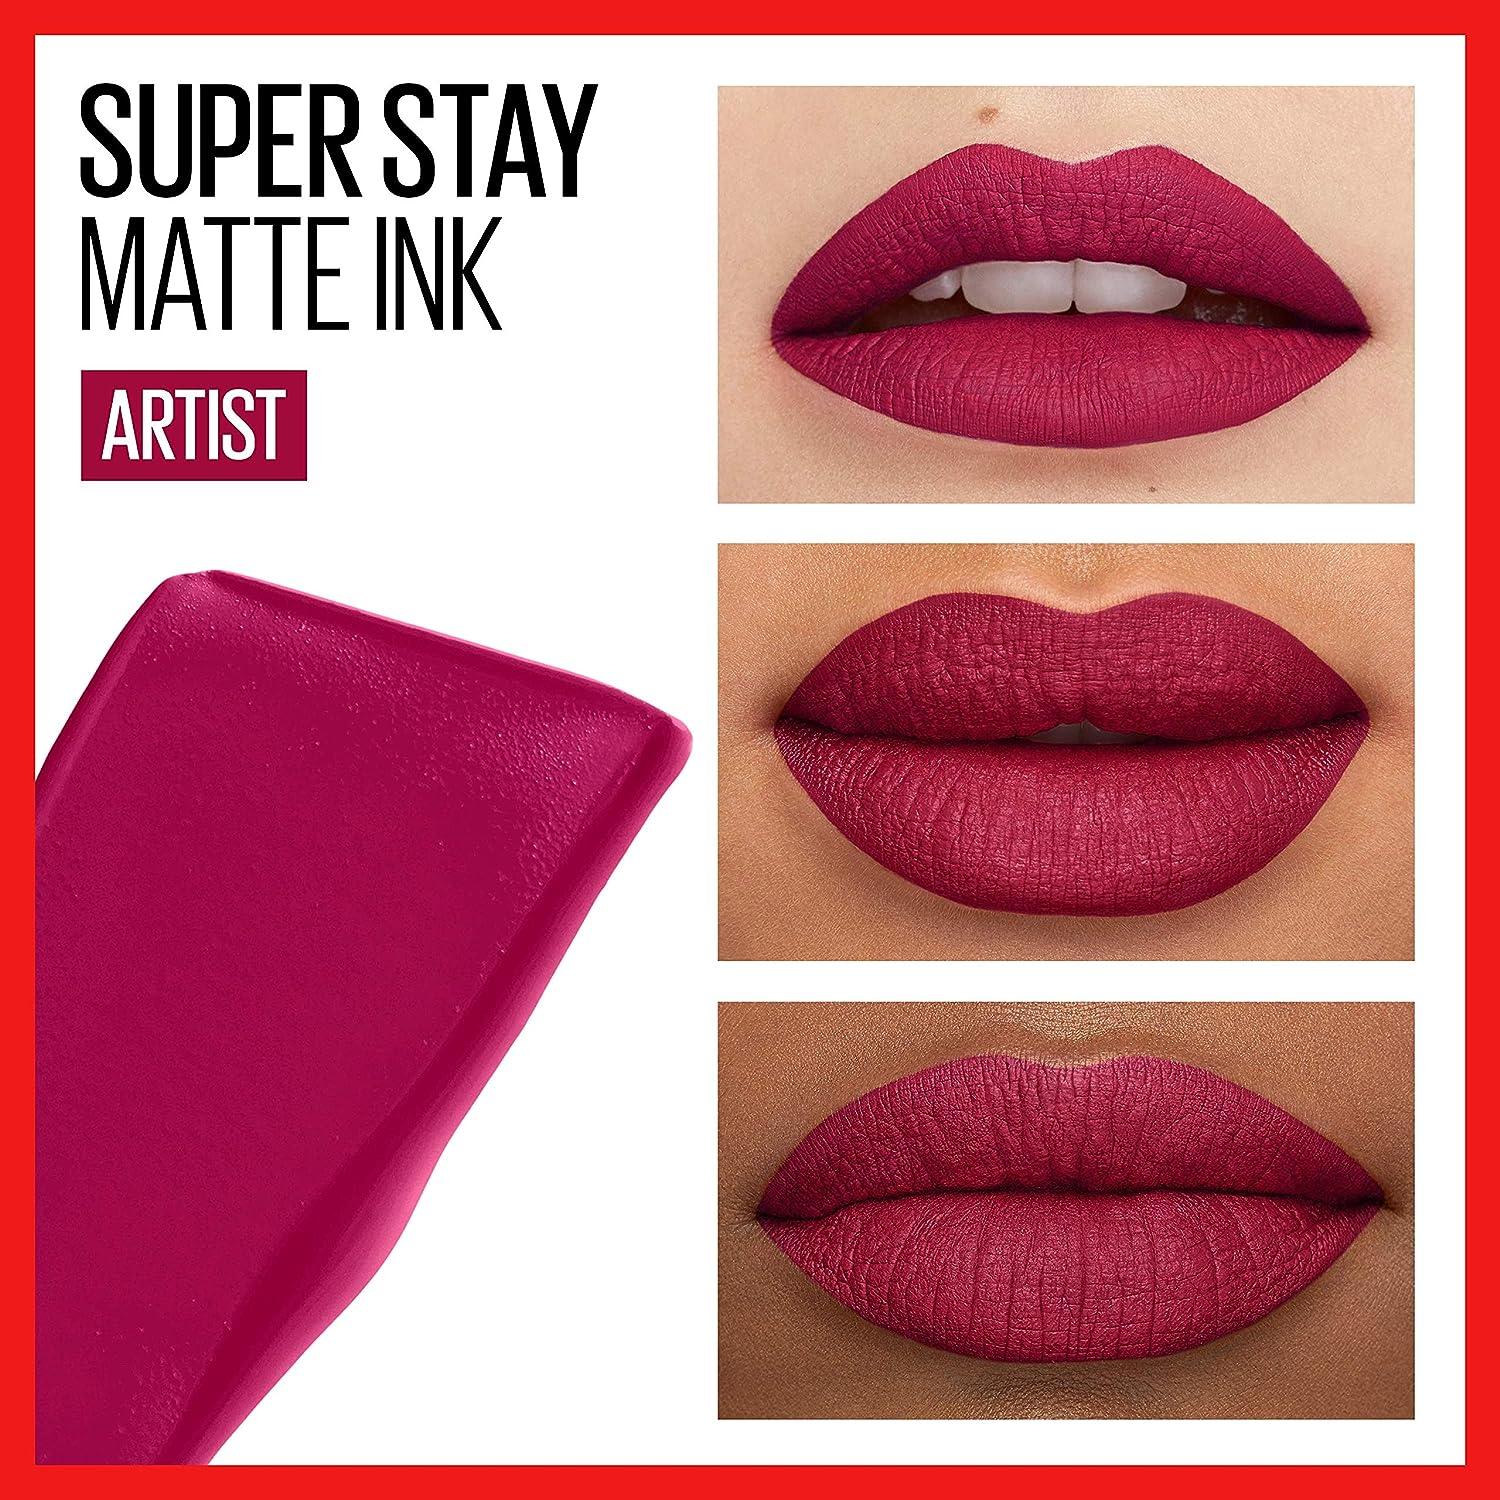 Buy Maybelline Matte Lipstick at Best Price in Kenya